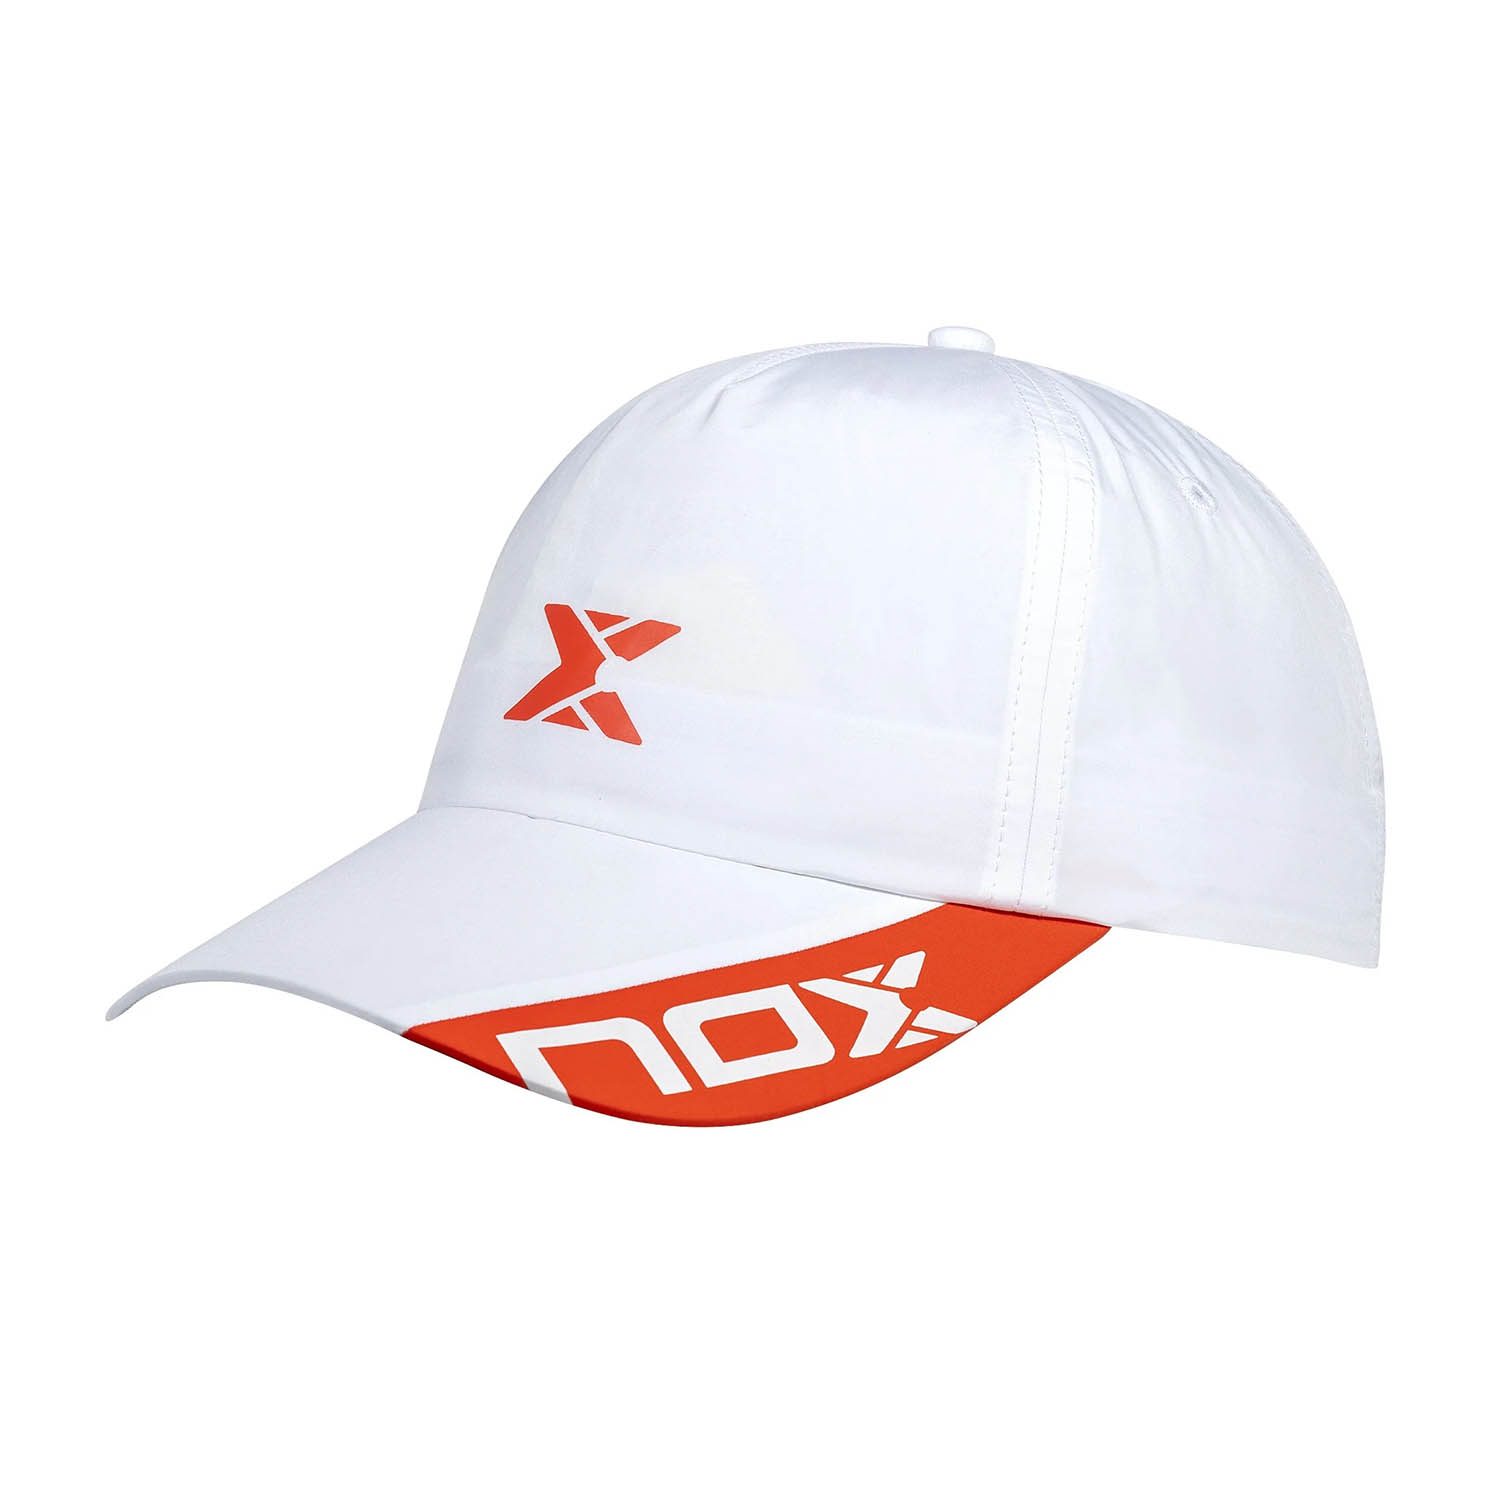 NOX Performance Hat/Cap - White/Red Logo